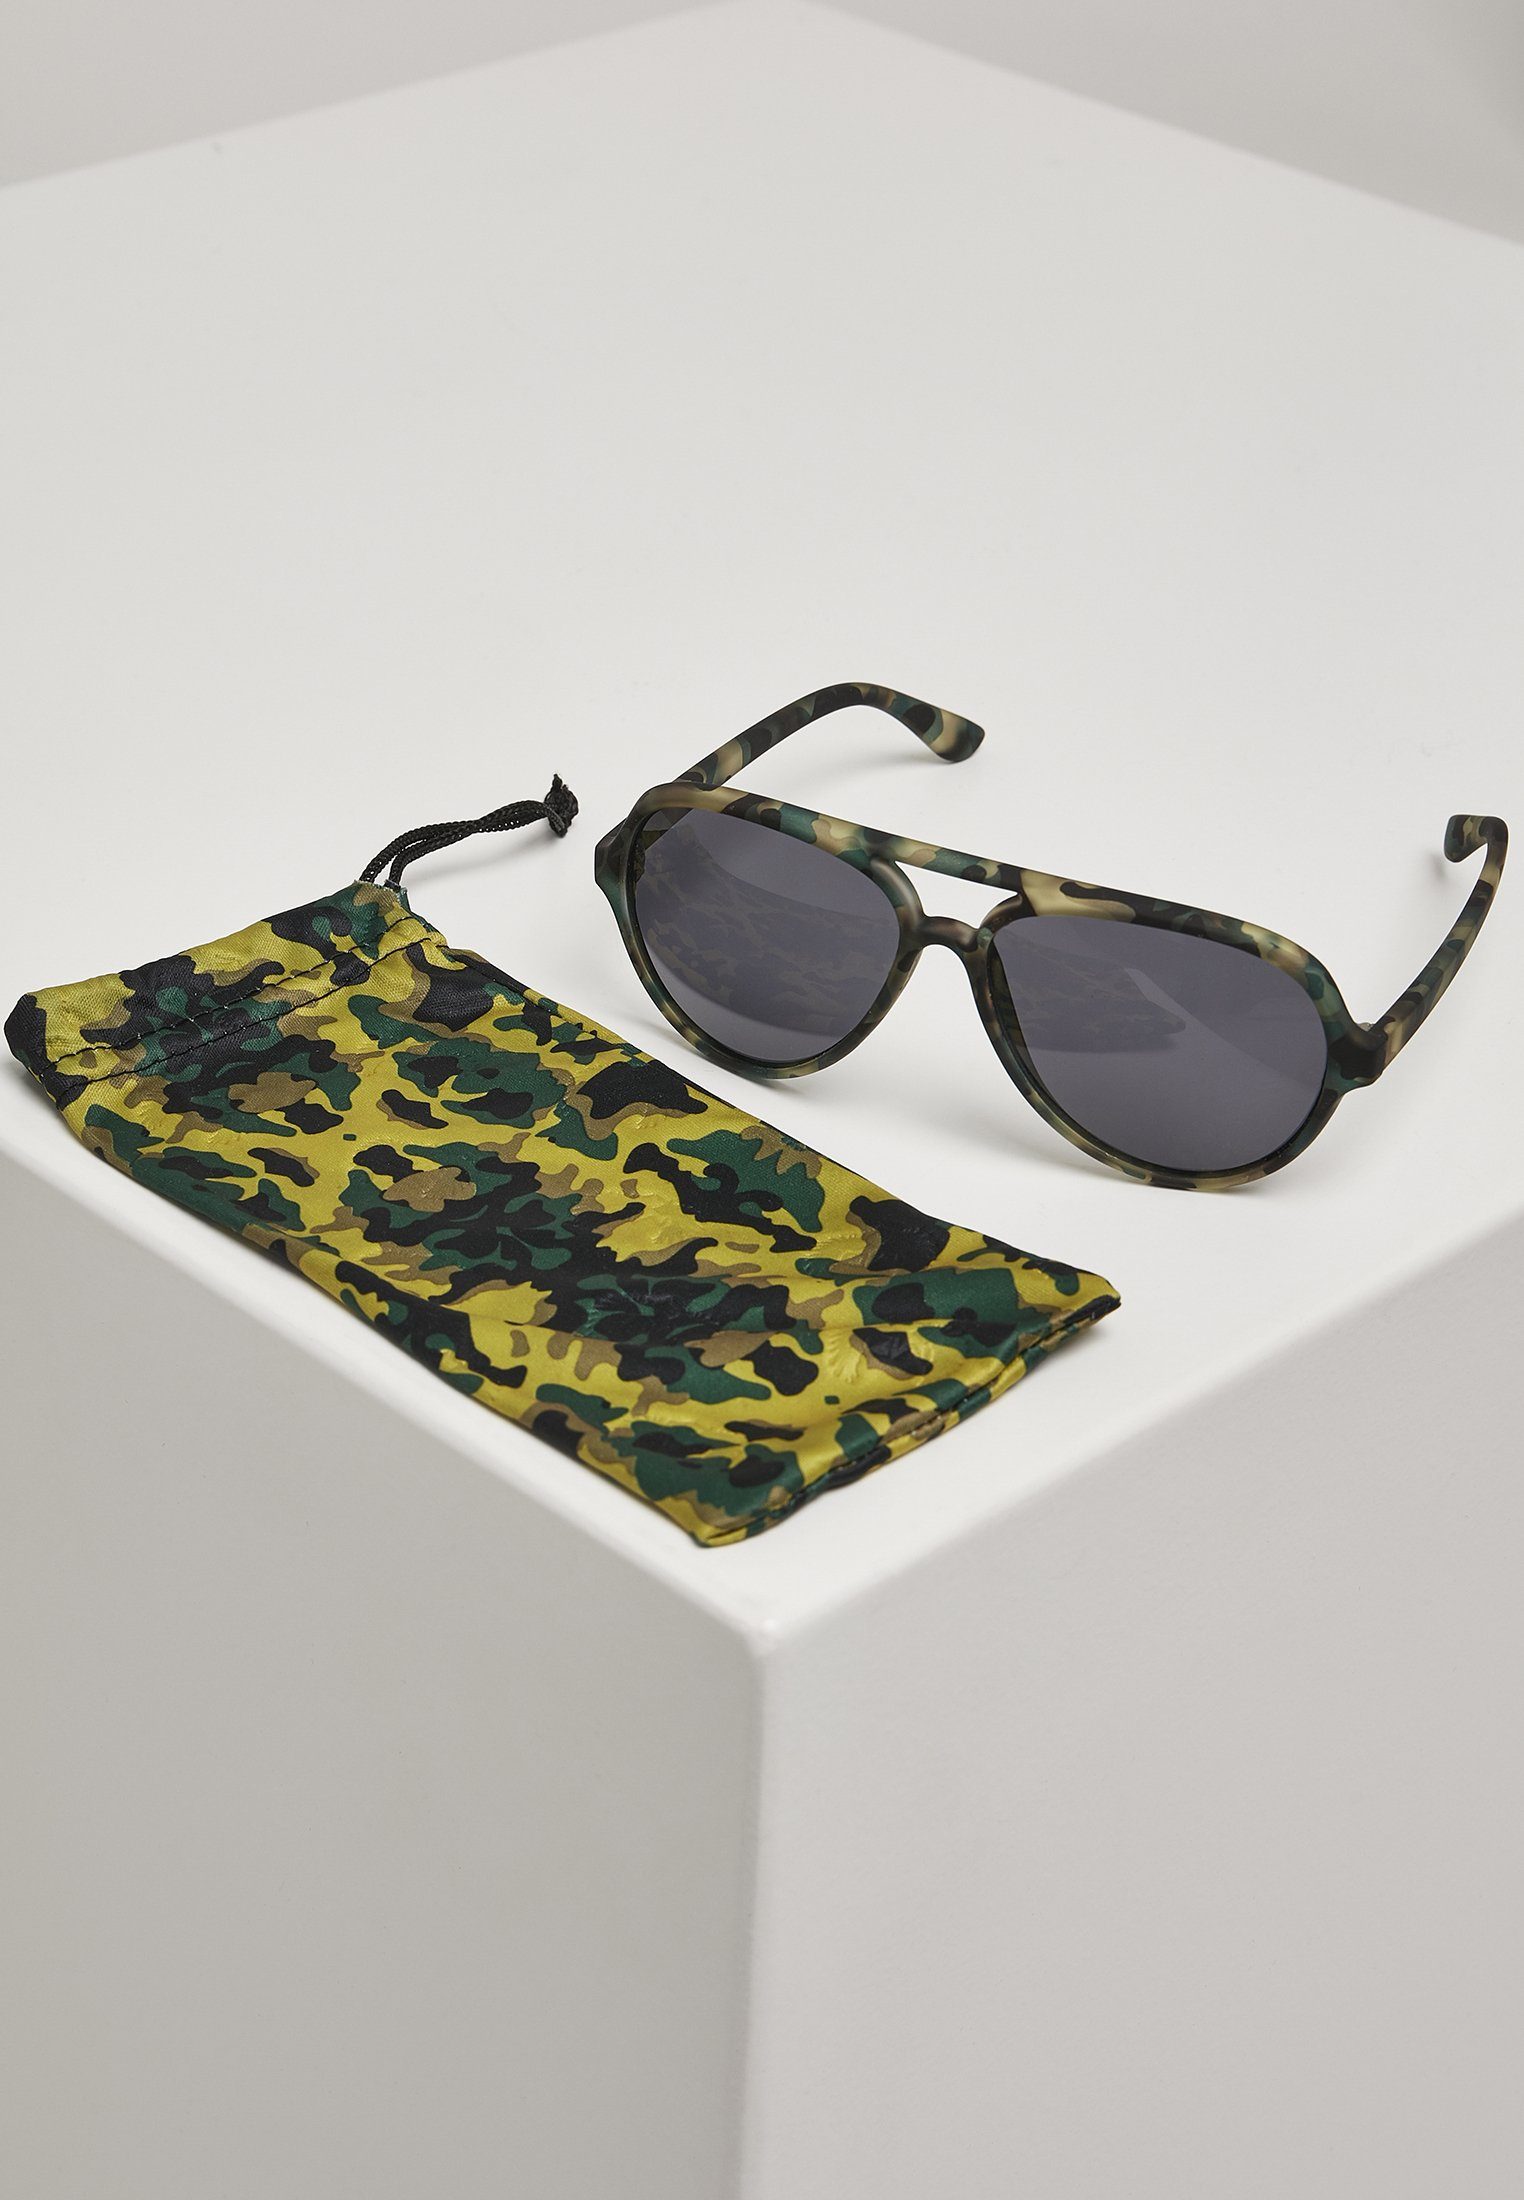 MSTRDS Sonnenbrille Accessoires camouflage Sunglasses March